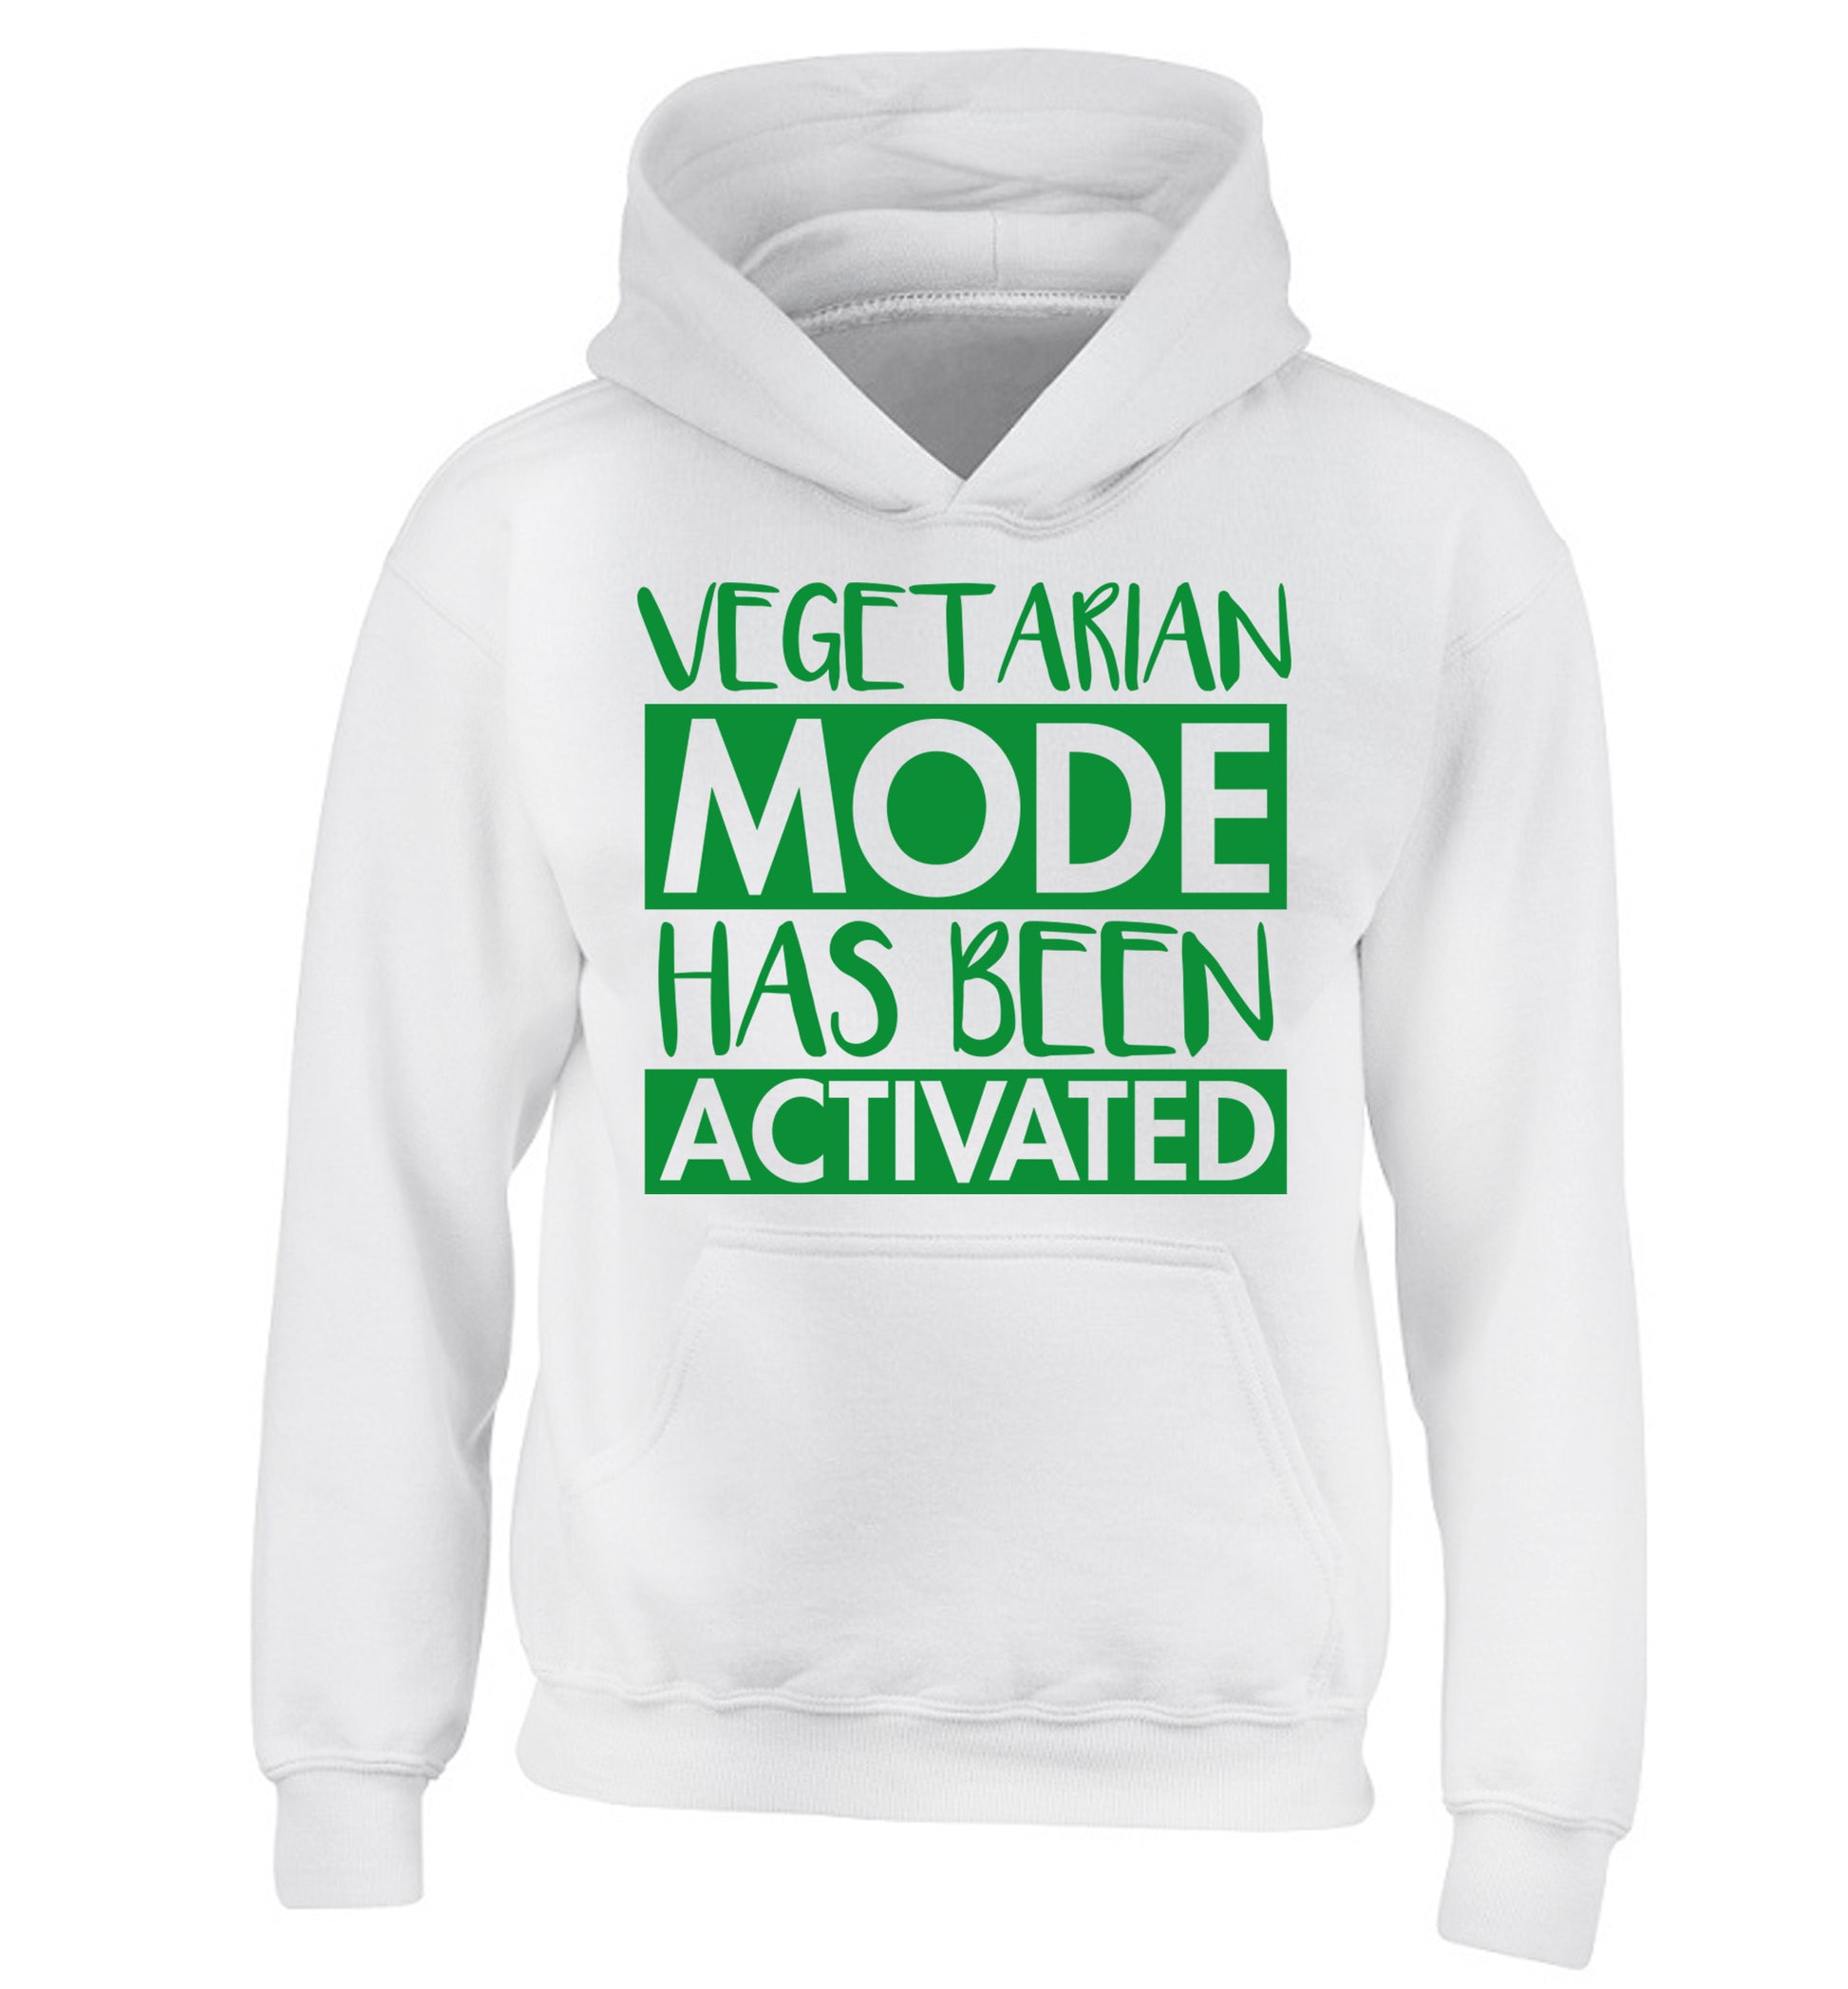 Vegetarian mode activated children's white hoodie 12-14 Years